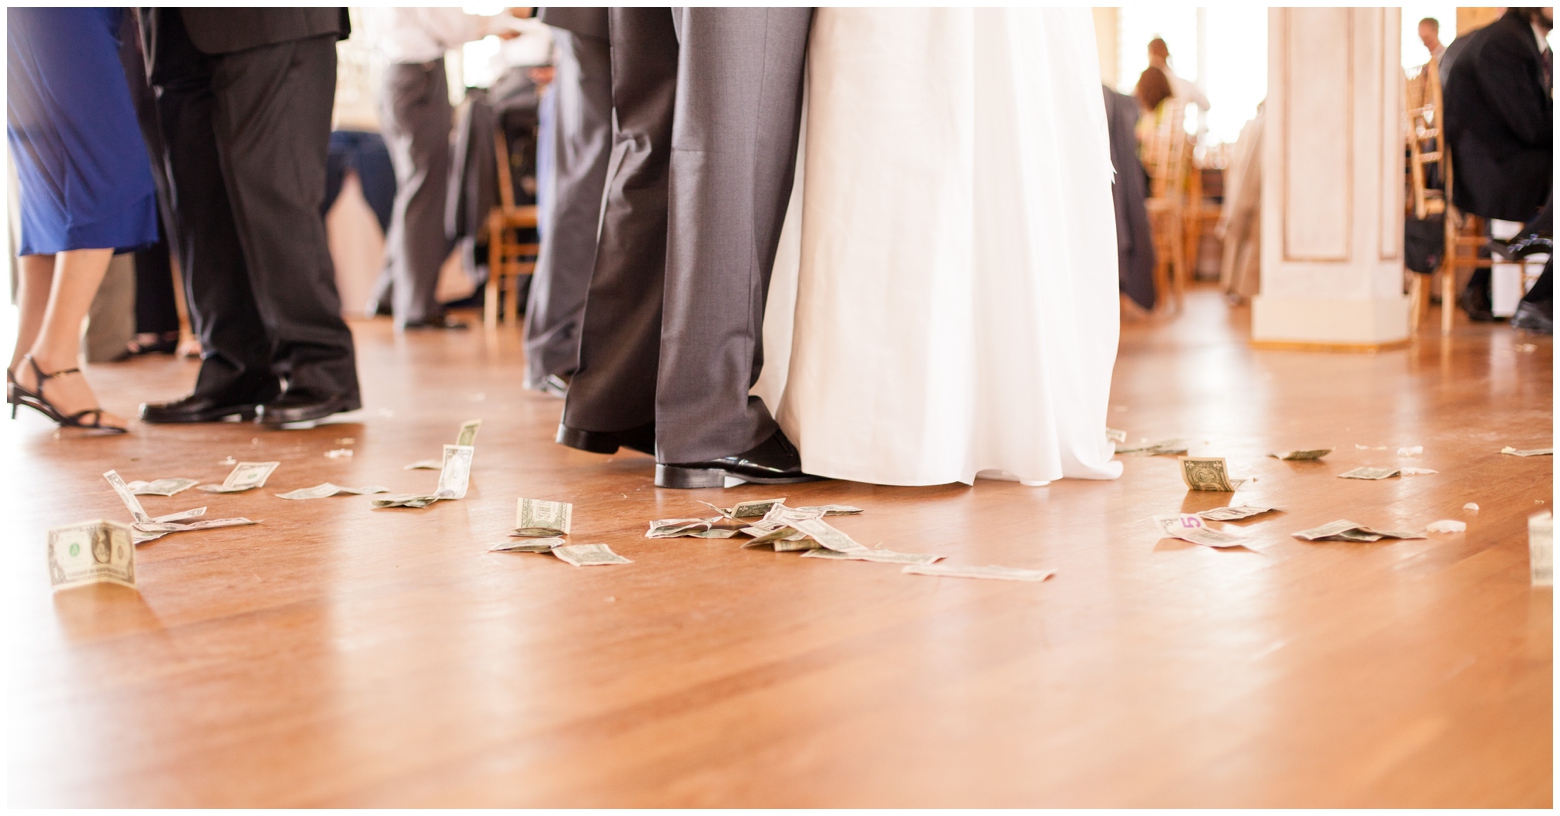 Tipping Wedding Vendors